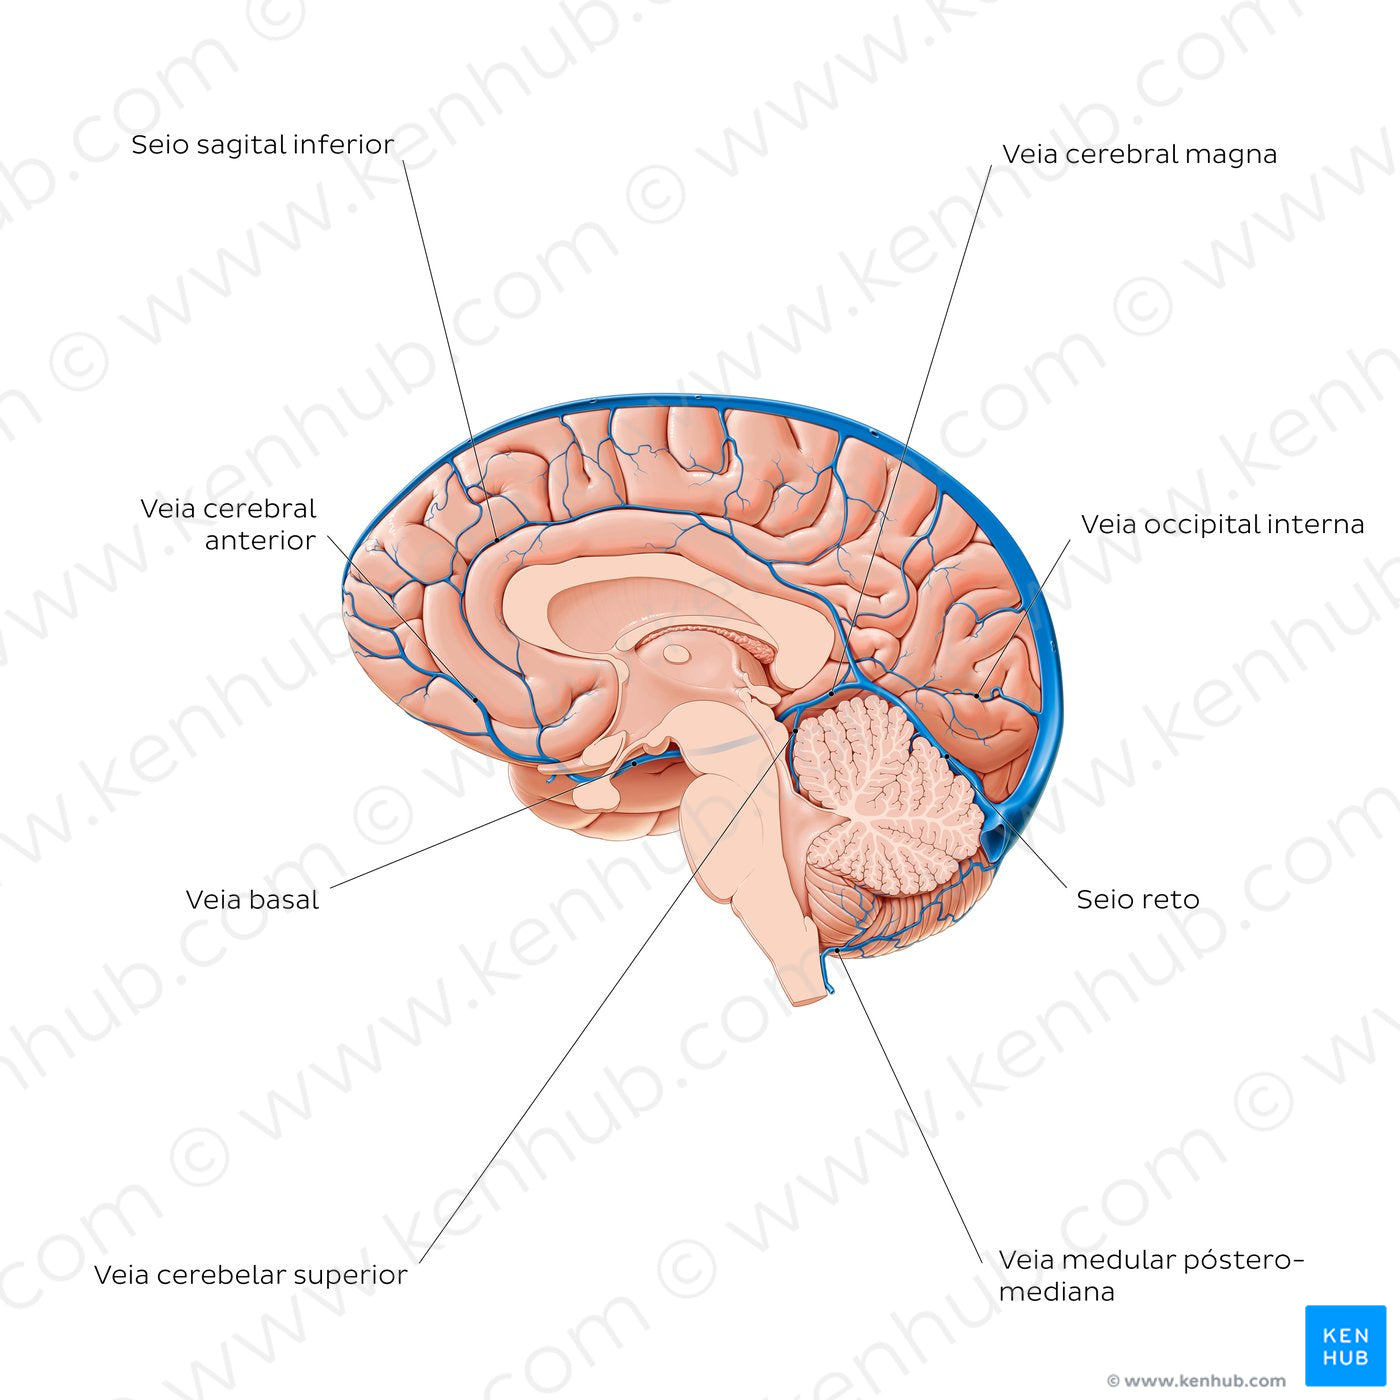 Cerebral veins - Medial view (Portuguese)